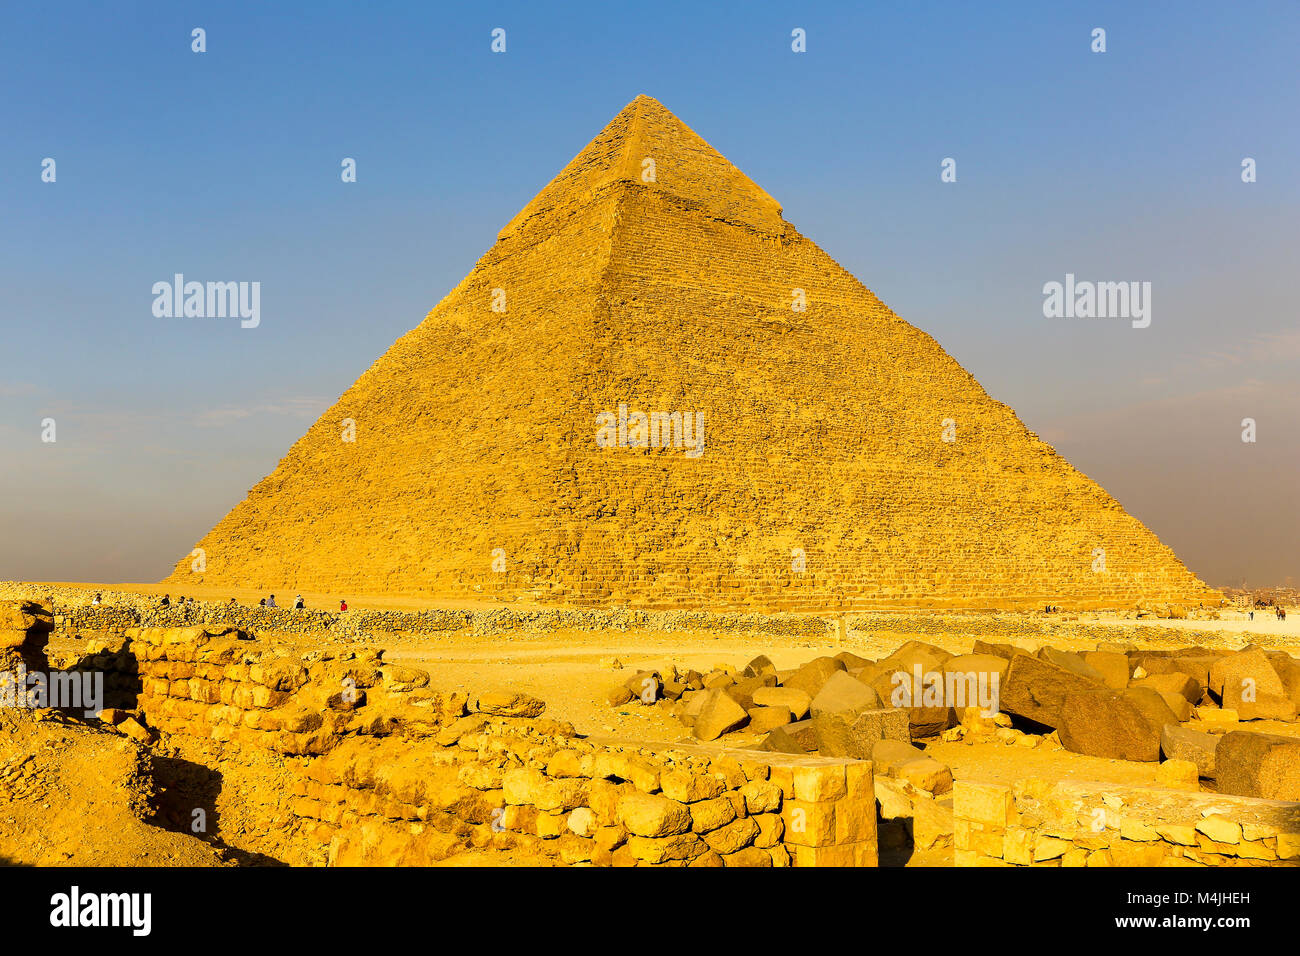 The Great Pyramid of Giza, Pyramids, Giza, Egypt, North Africa Stock Photo